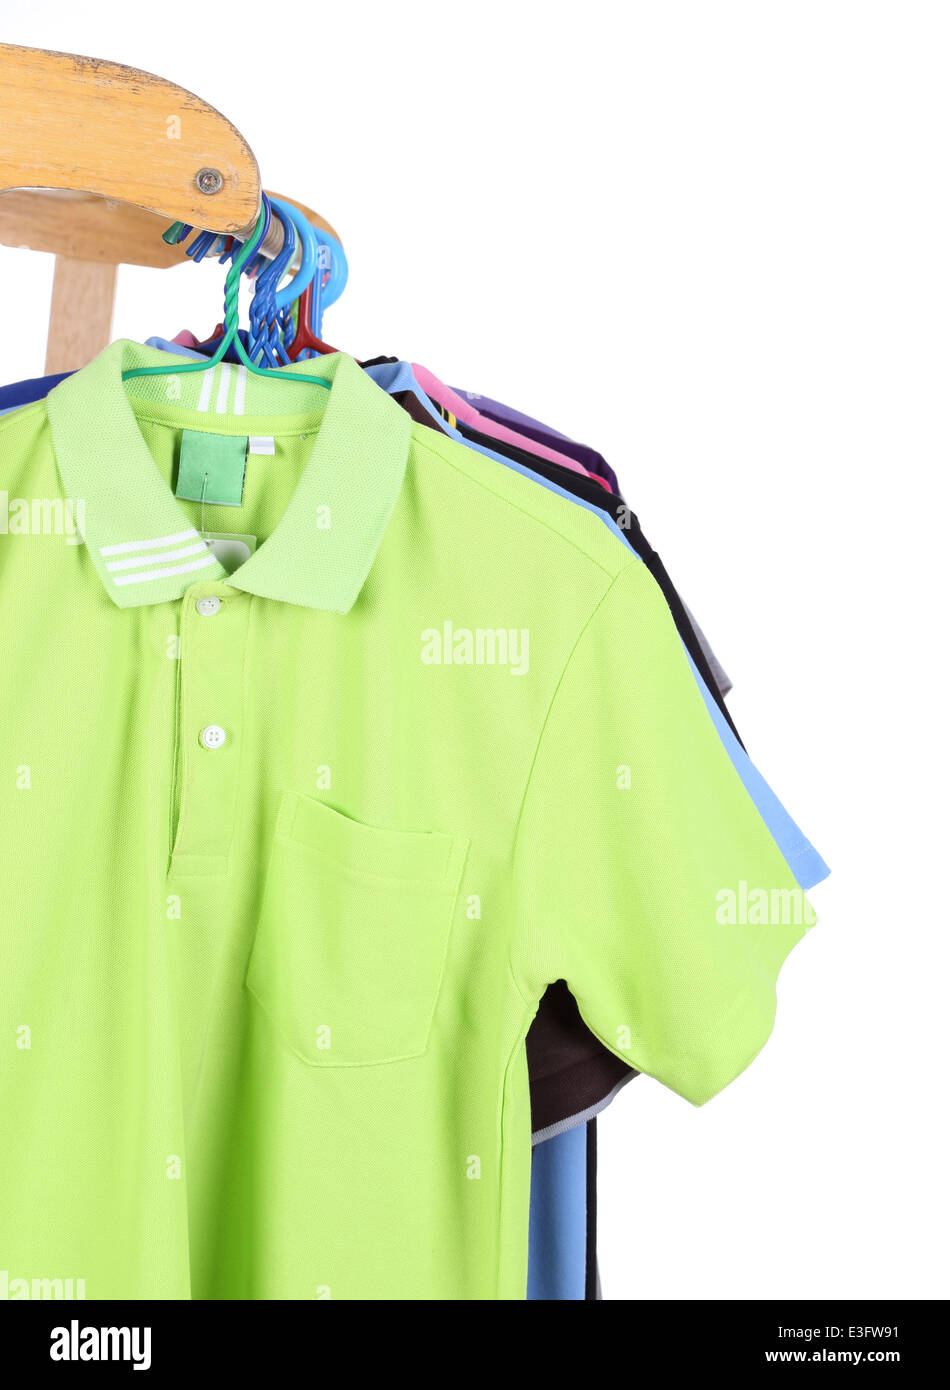 Hanging Polo shirt isolted on white background Stock Photo